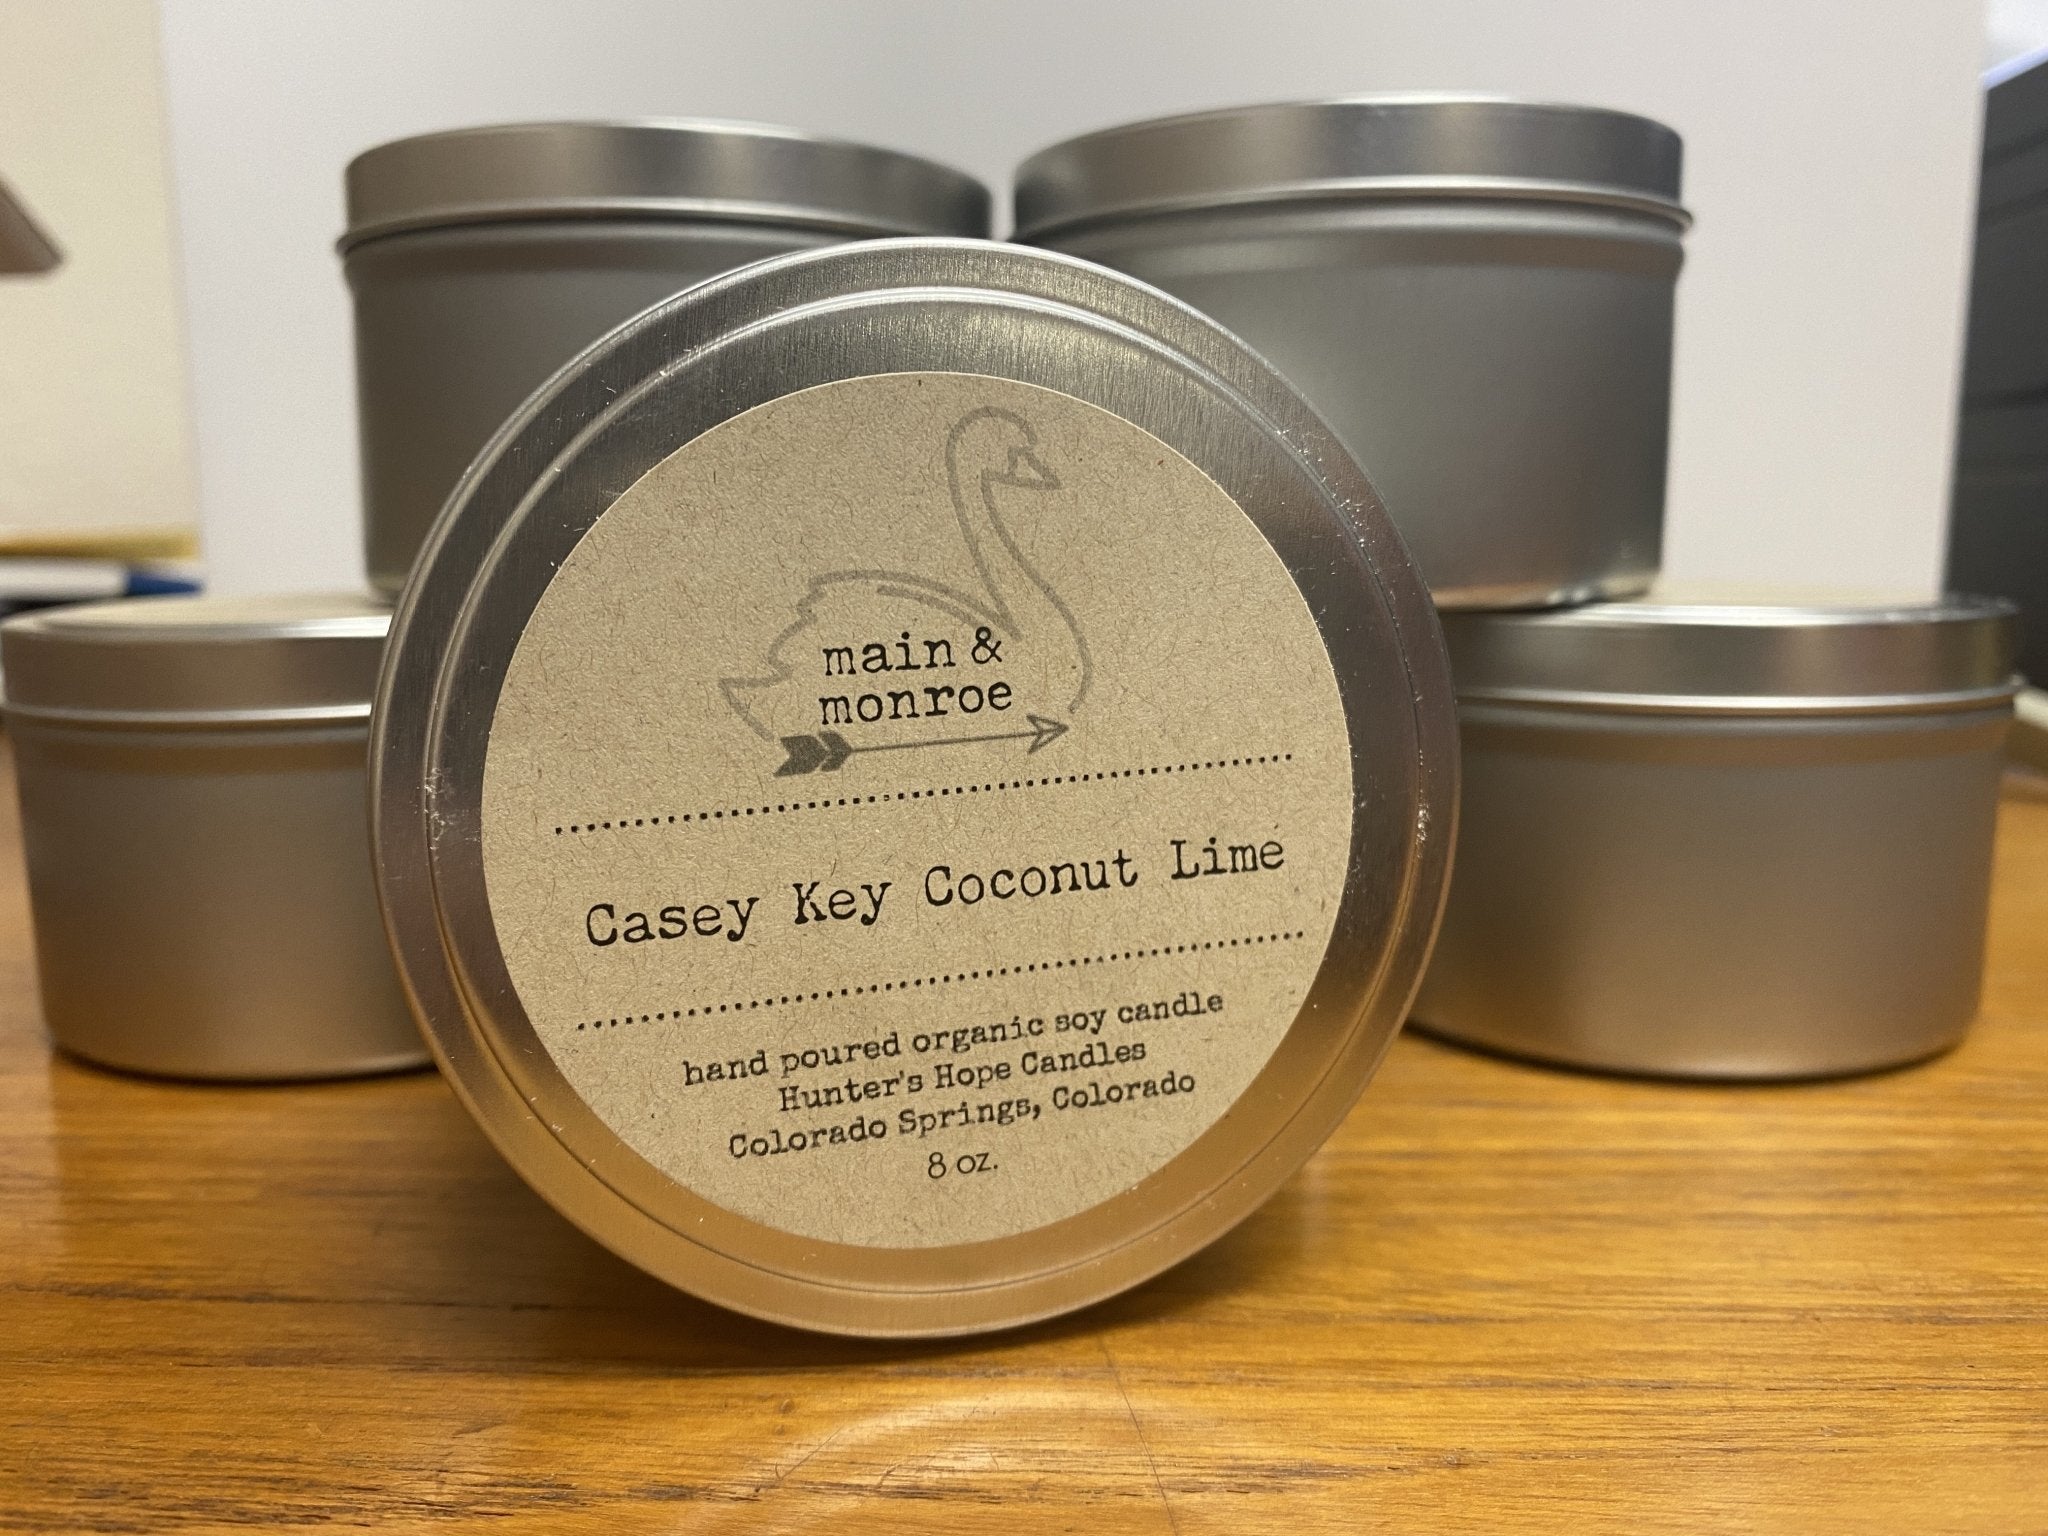 Casey Key Coconut Lime Candle - Main & Monroe